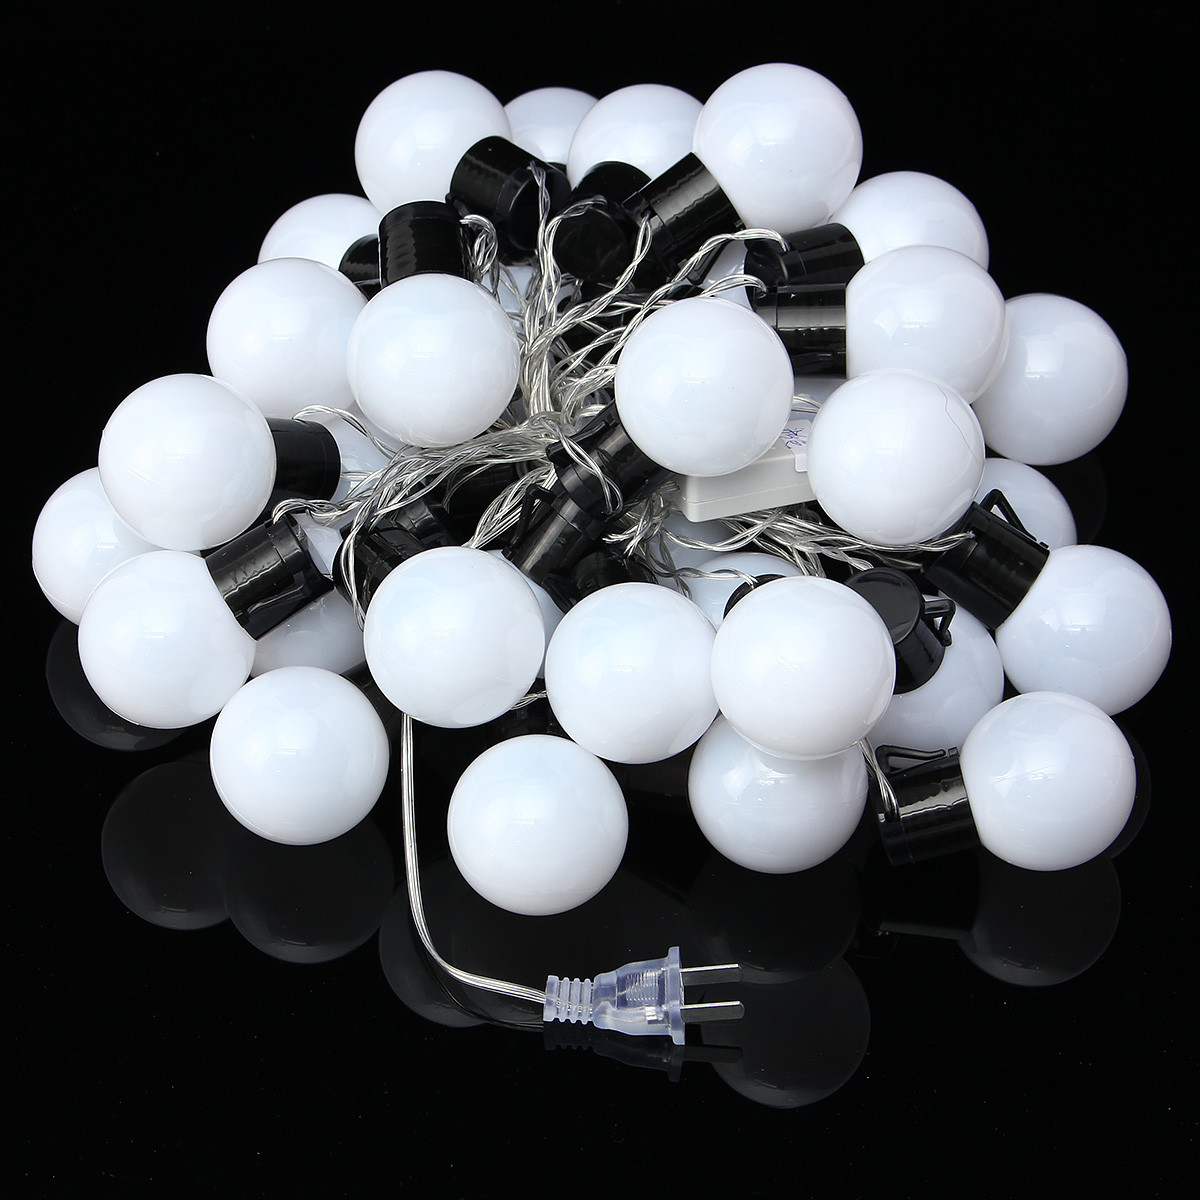 10m-38-Balls-LED-String-Fairy-Lights-Party-Xmas-Wedding-Holiday-Lamp-110V-US-Plug-1095913-2